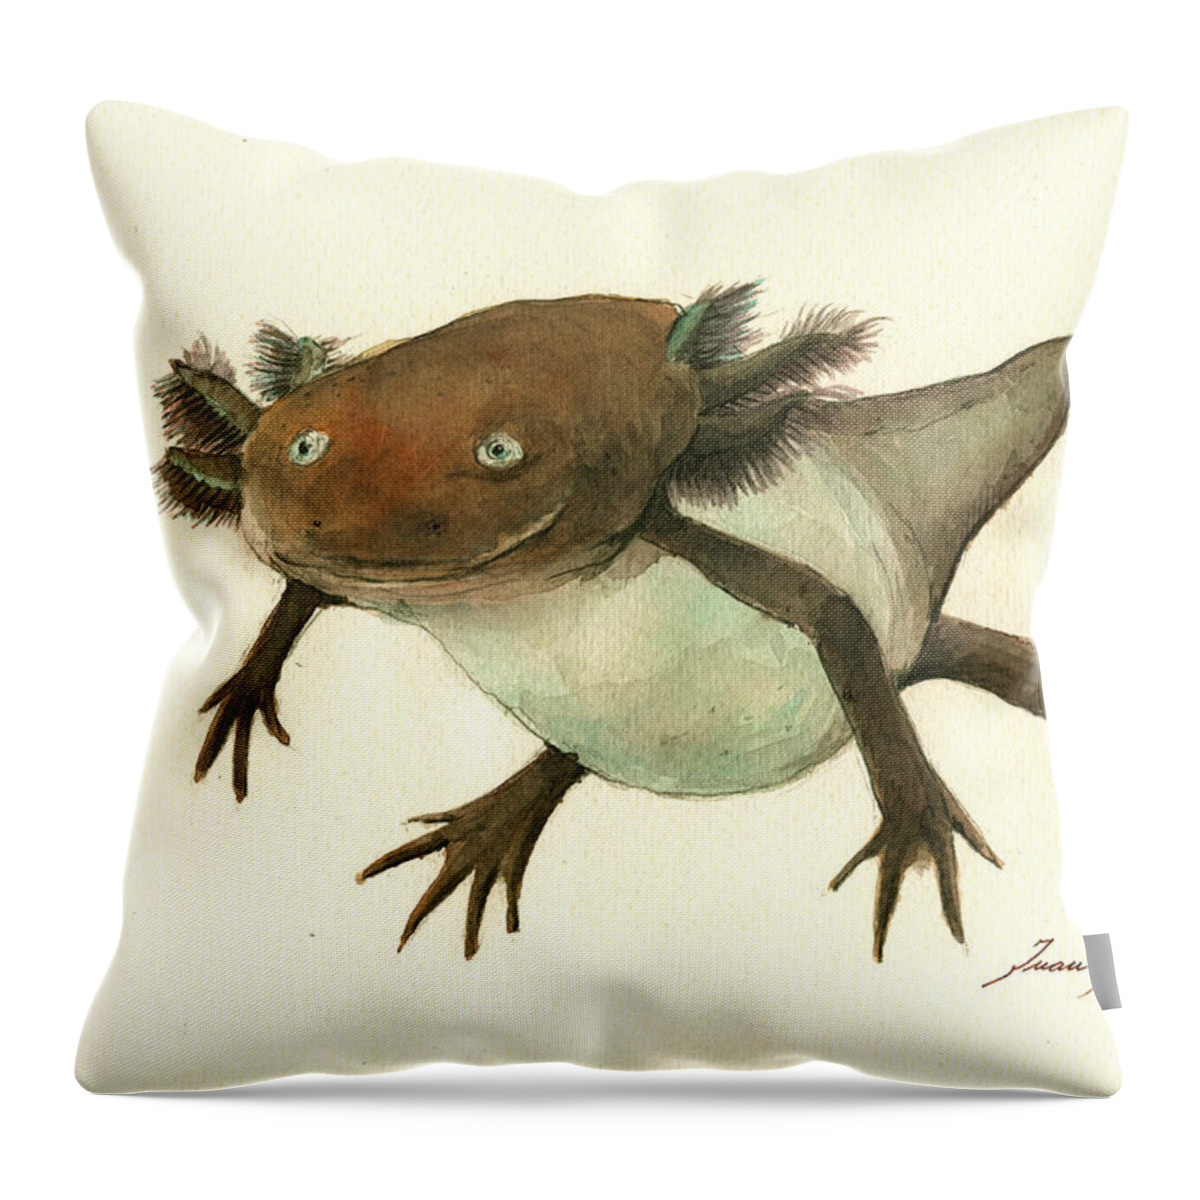 Axolotl Throw Pillow featuring the painting Axolotl by Juan Bosco